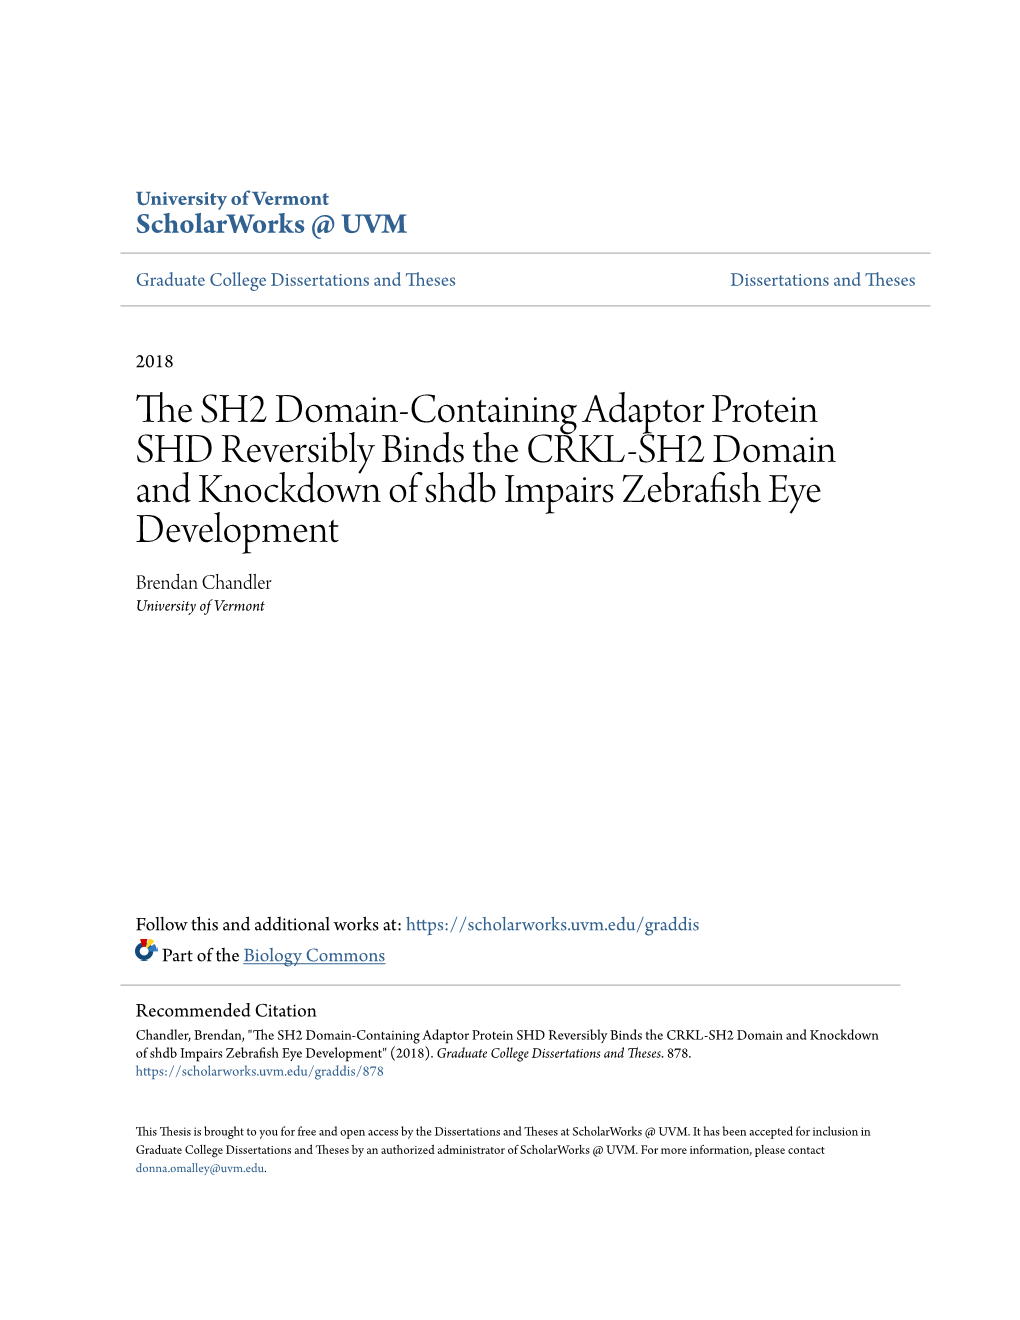 The Sh2 Domain-Containing Adaptor Protein Shd Reversibly Binds the Crkl-Sh2 Domain and Knockdown of Shdb Impairs Zebrafish Eye Development